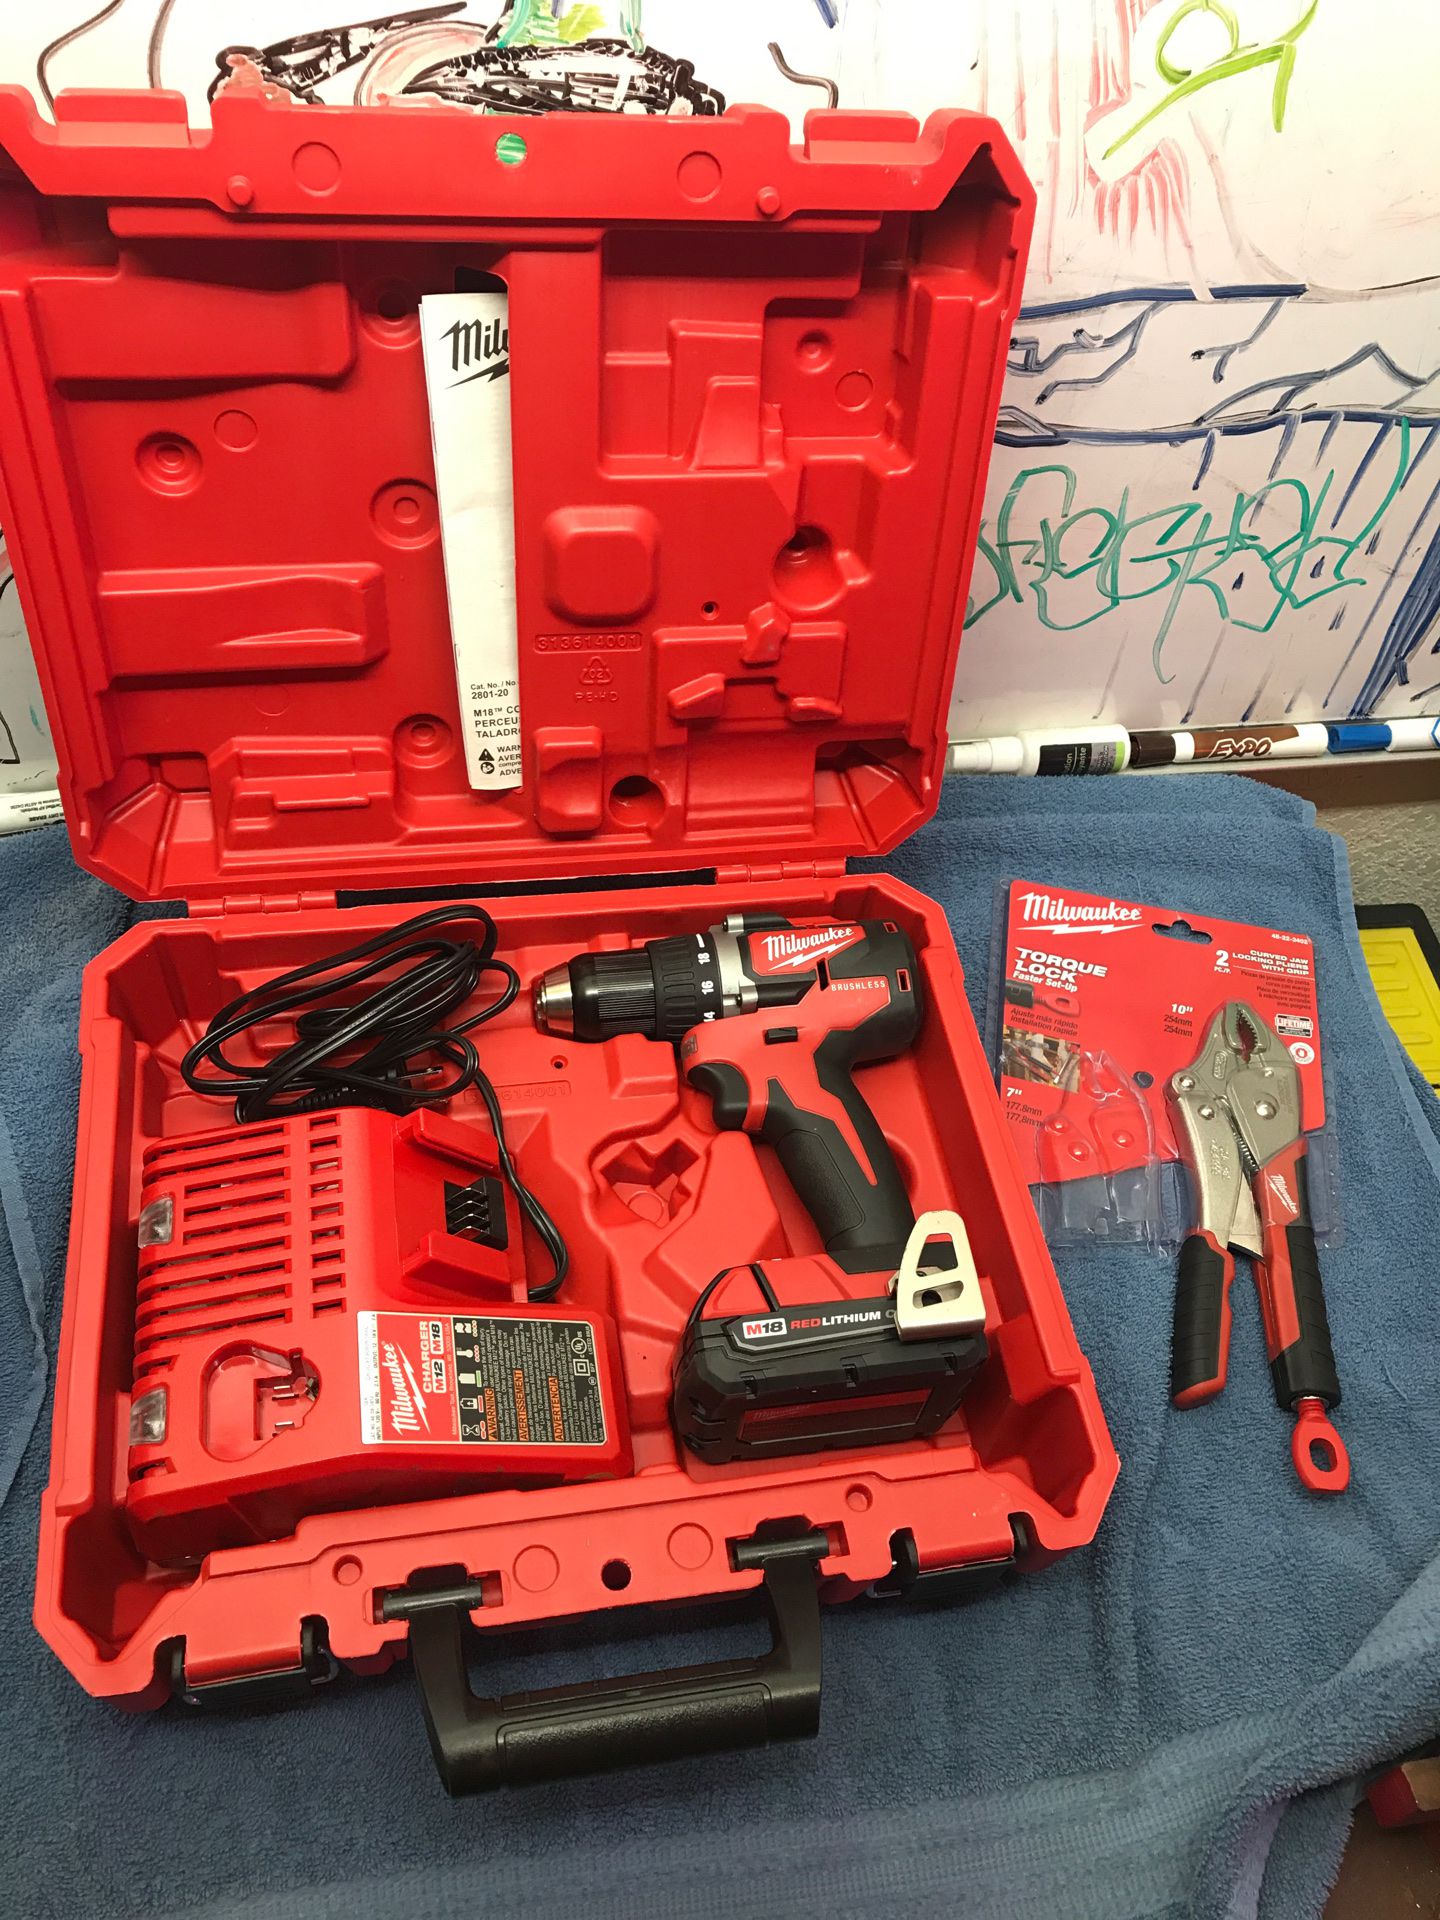 Milwaukee 2801-22ct kit m18 compact brushless drill driver